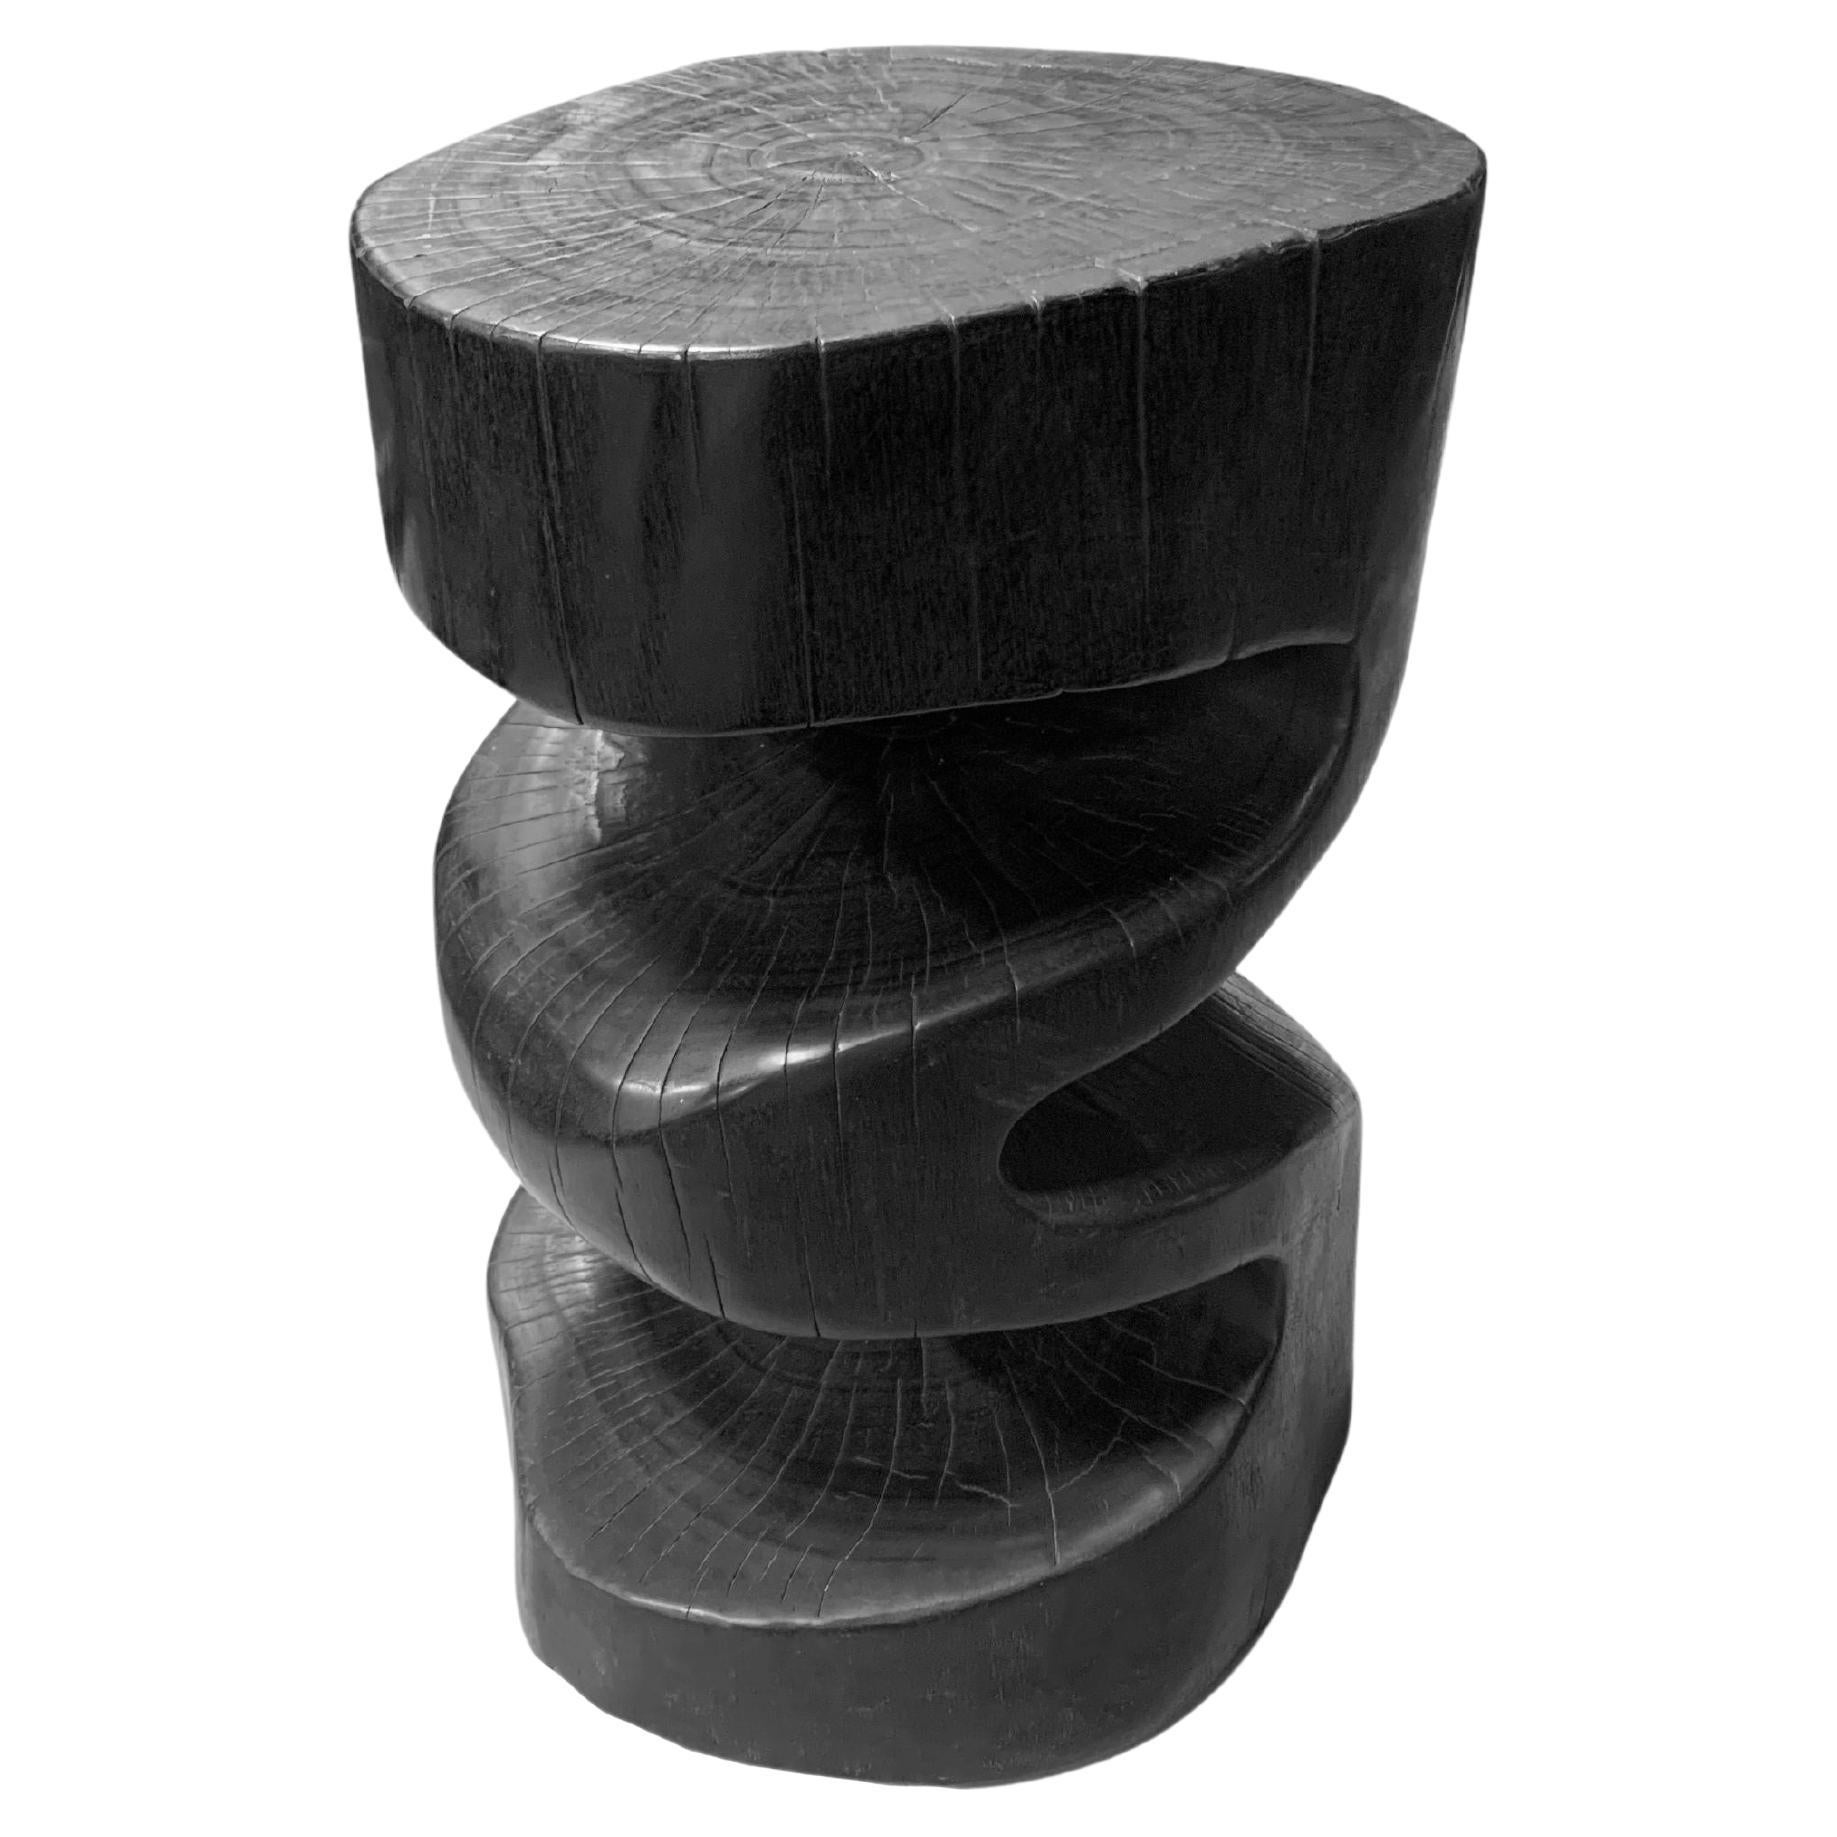 Sculptural Stool / Side Table Solid Mango Wood Burnt Finish Modern Organic